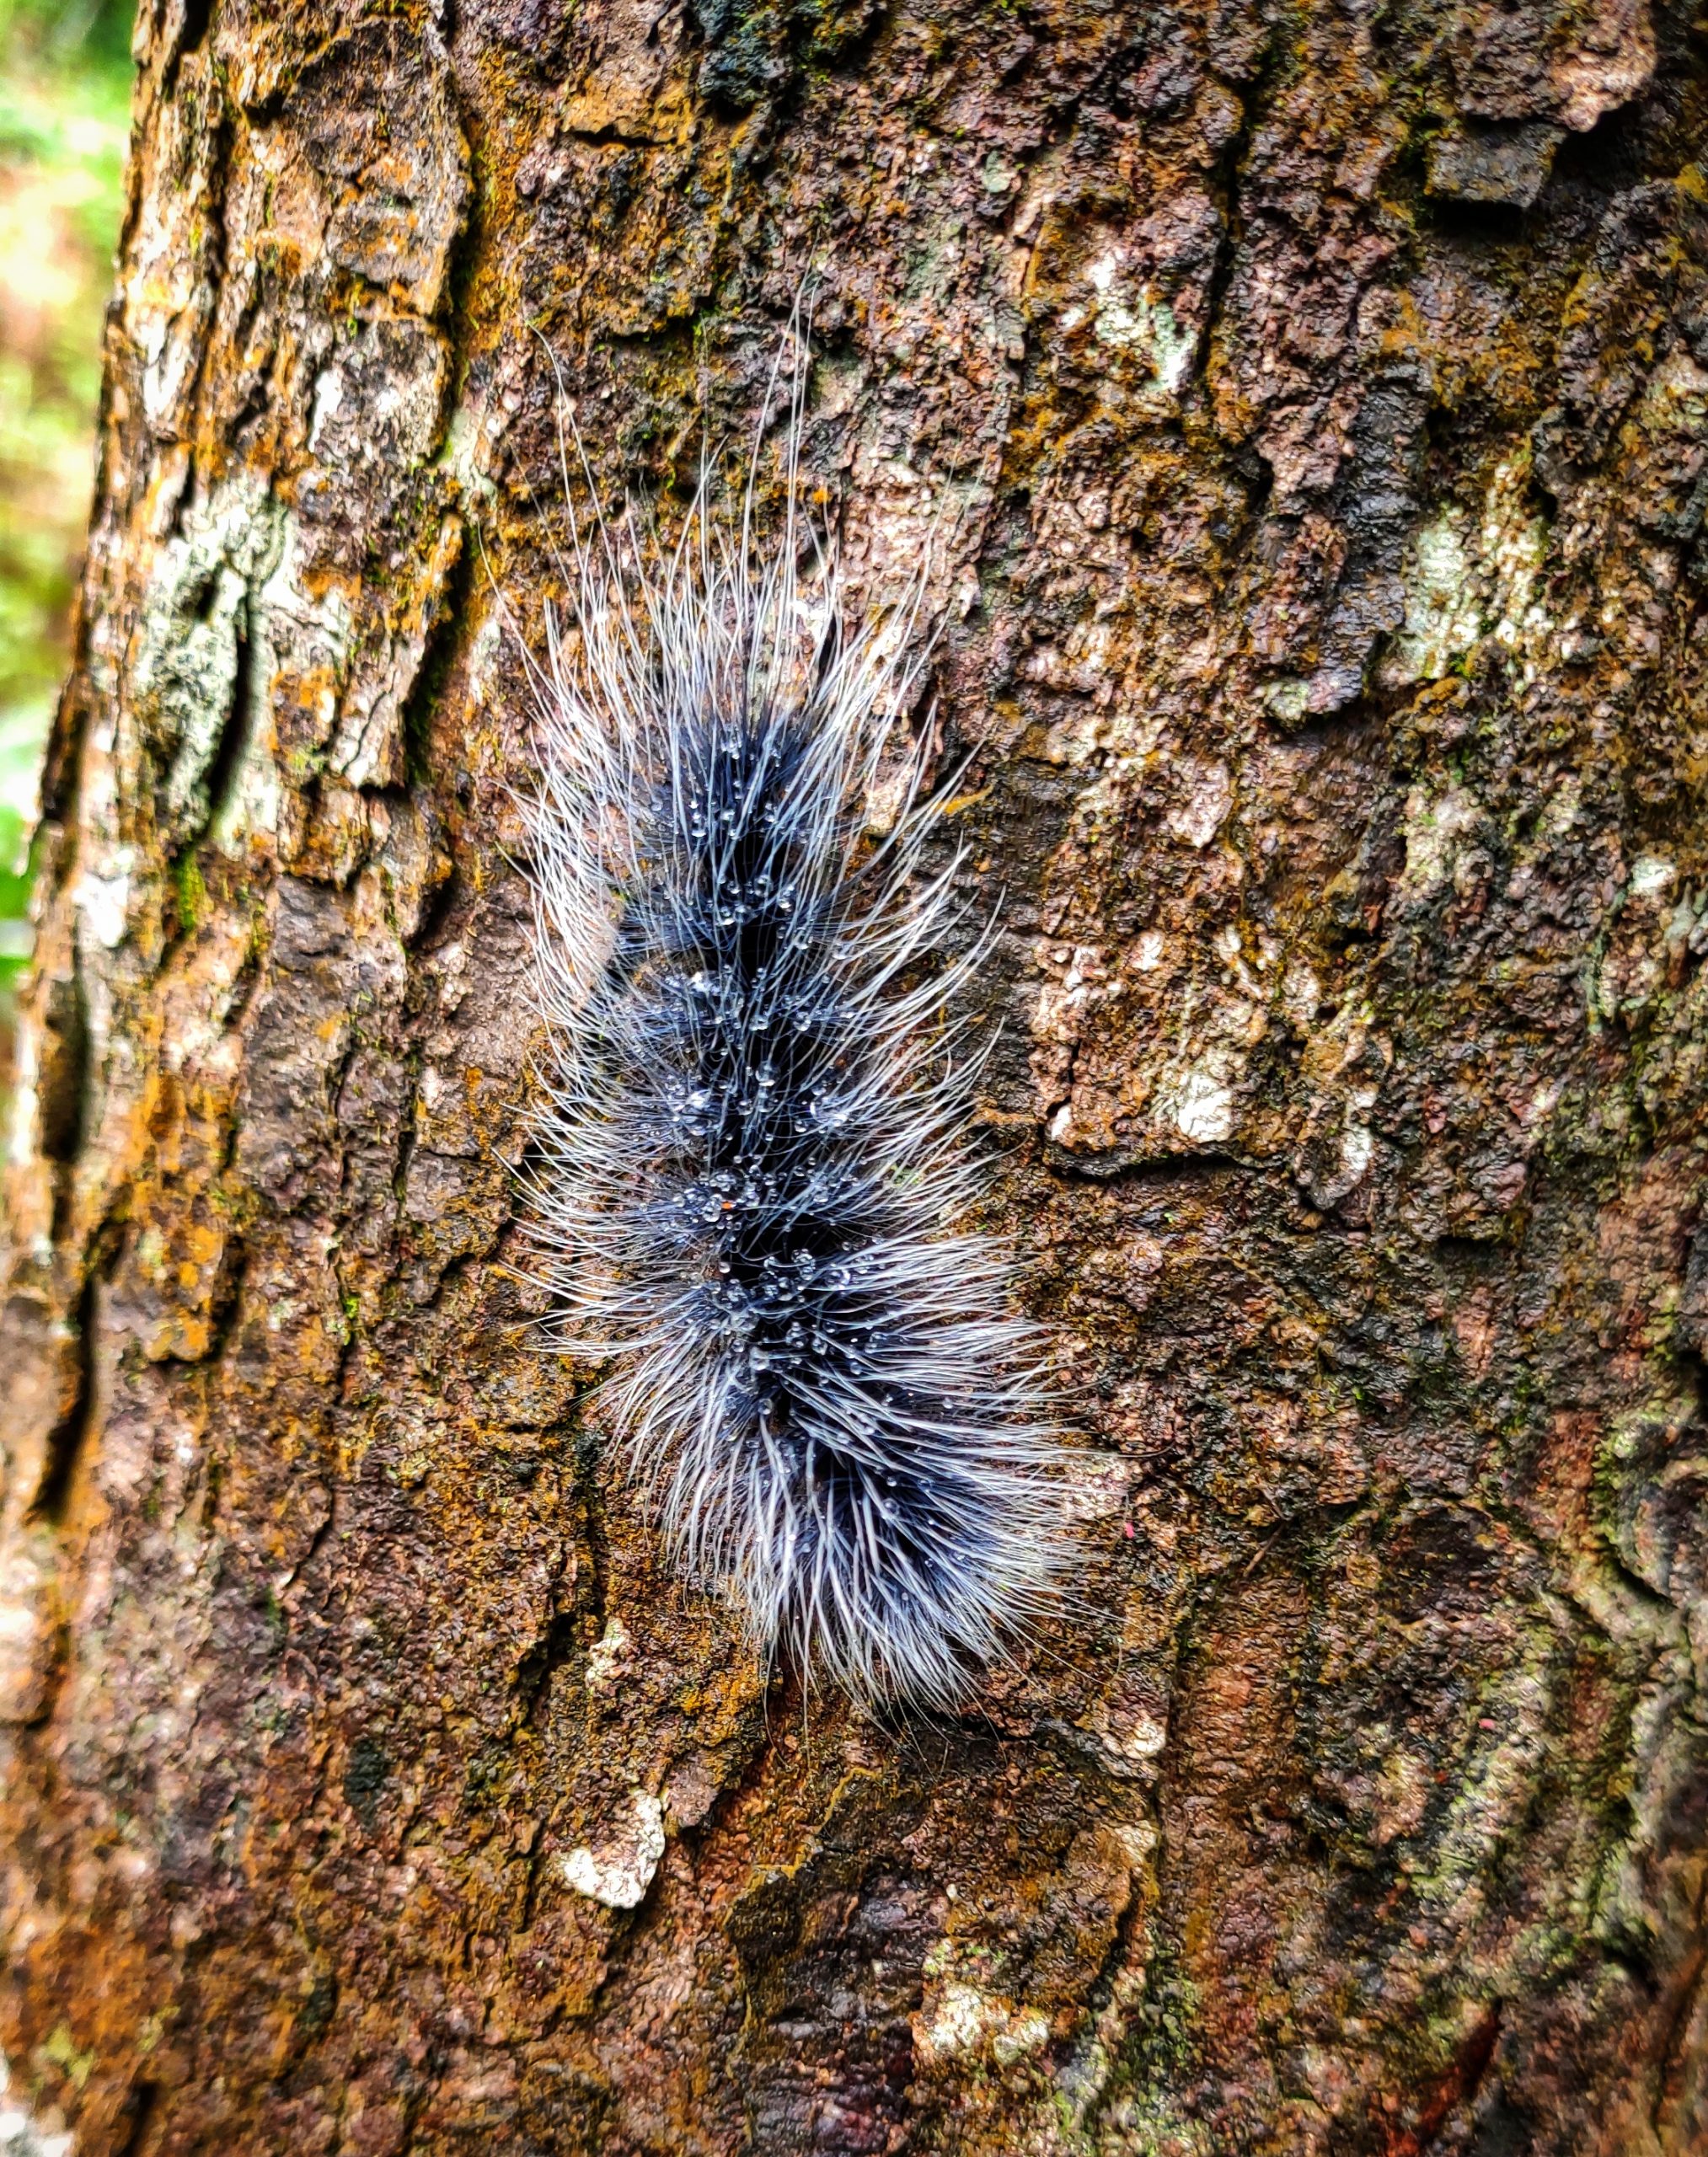 A caterpillar on tree trunk